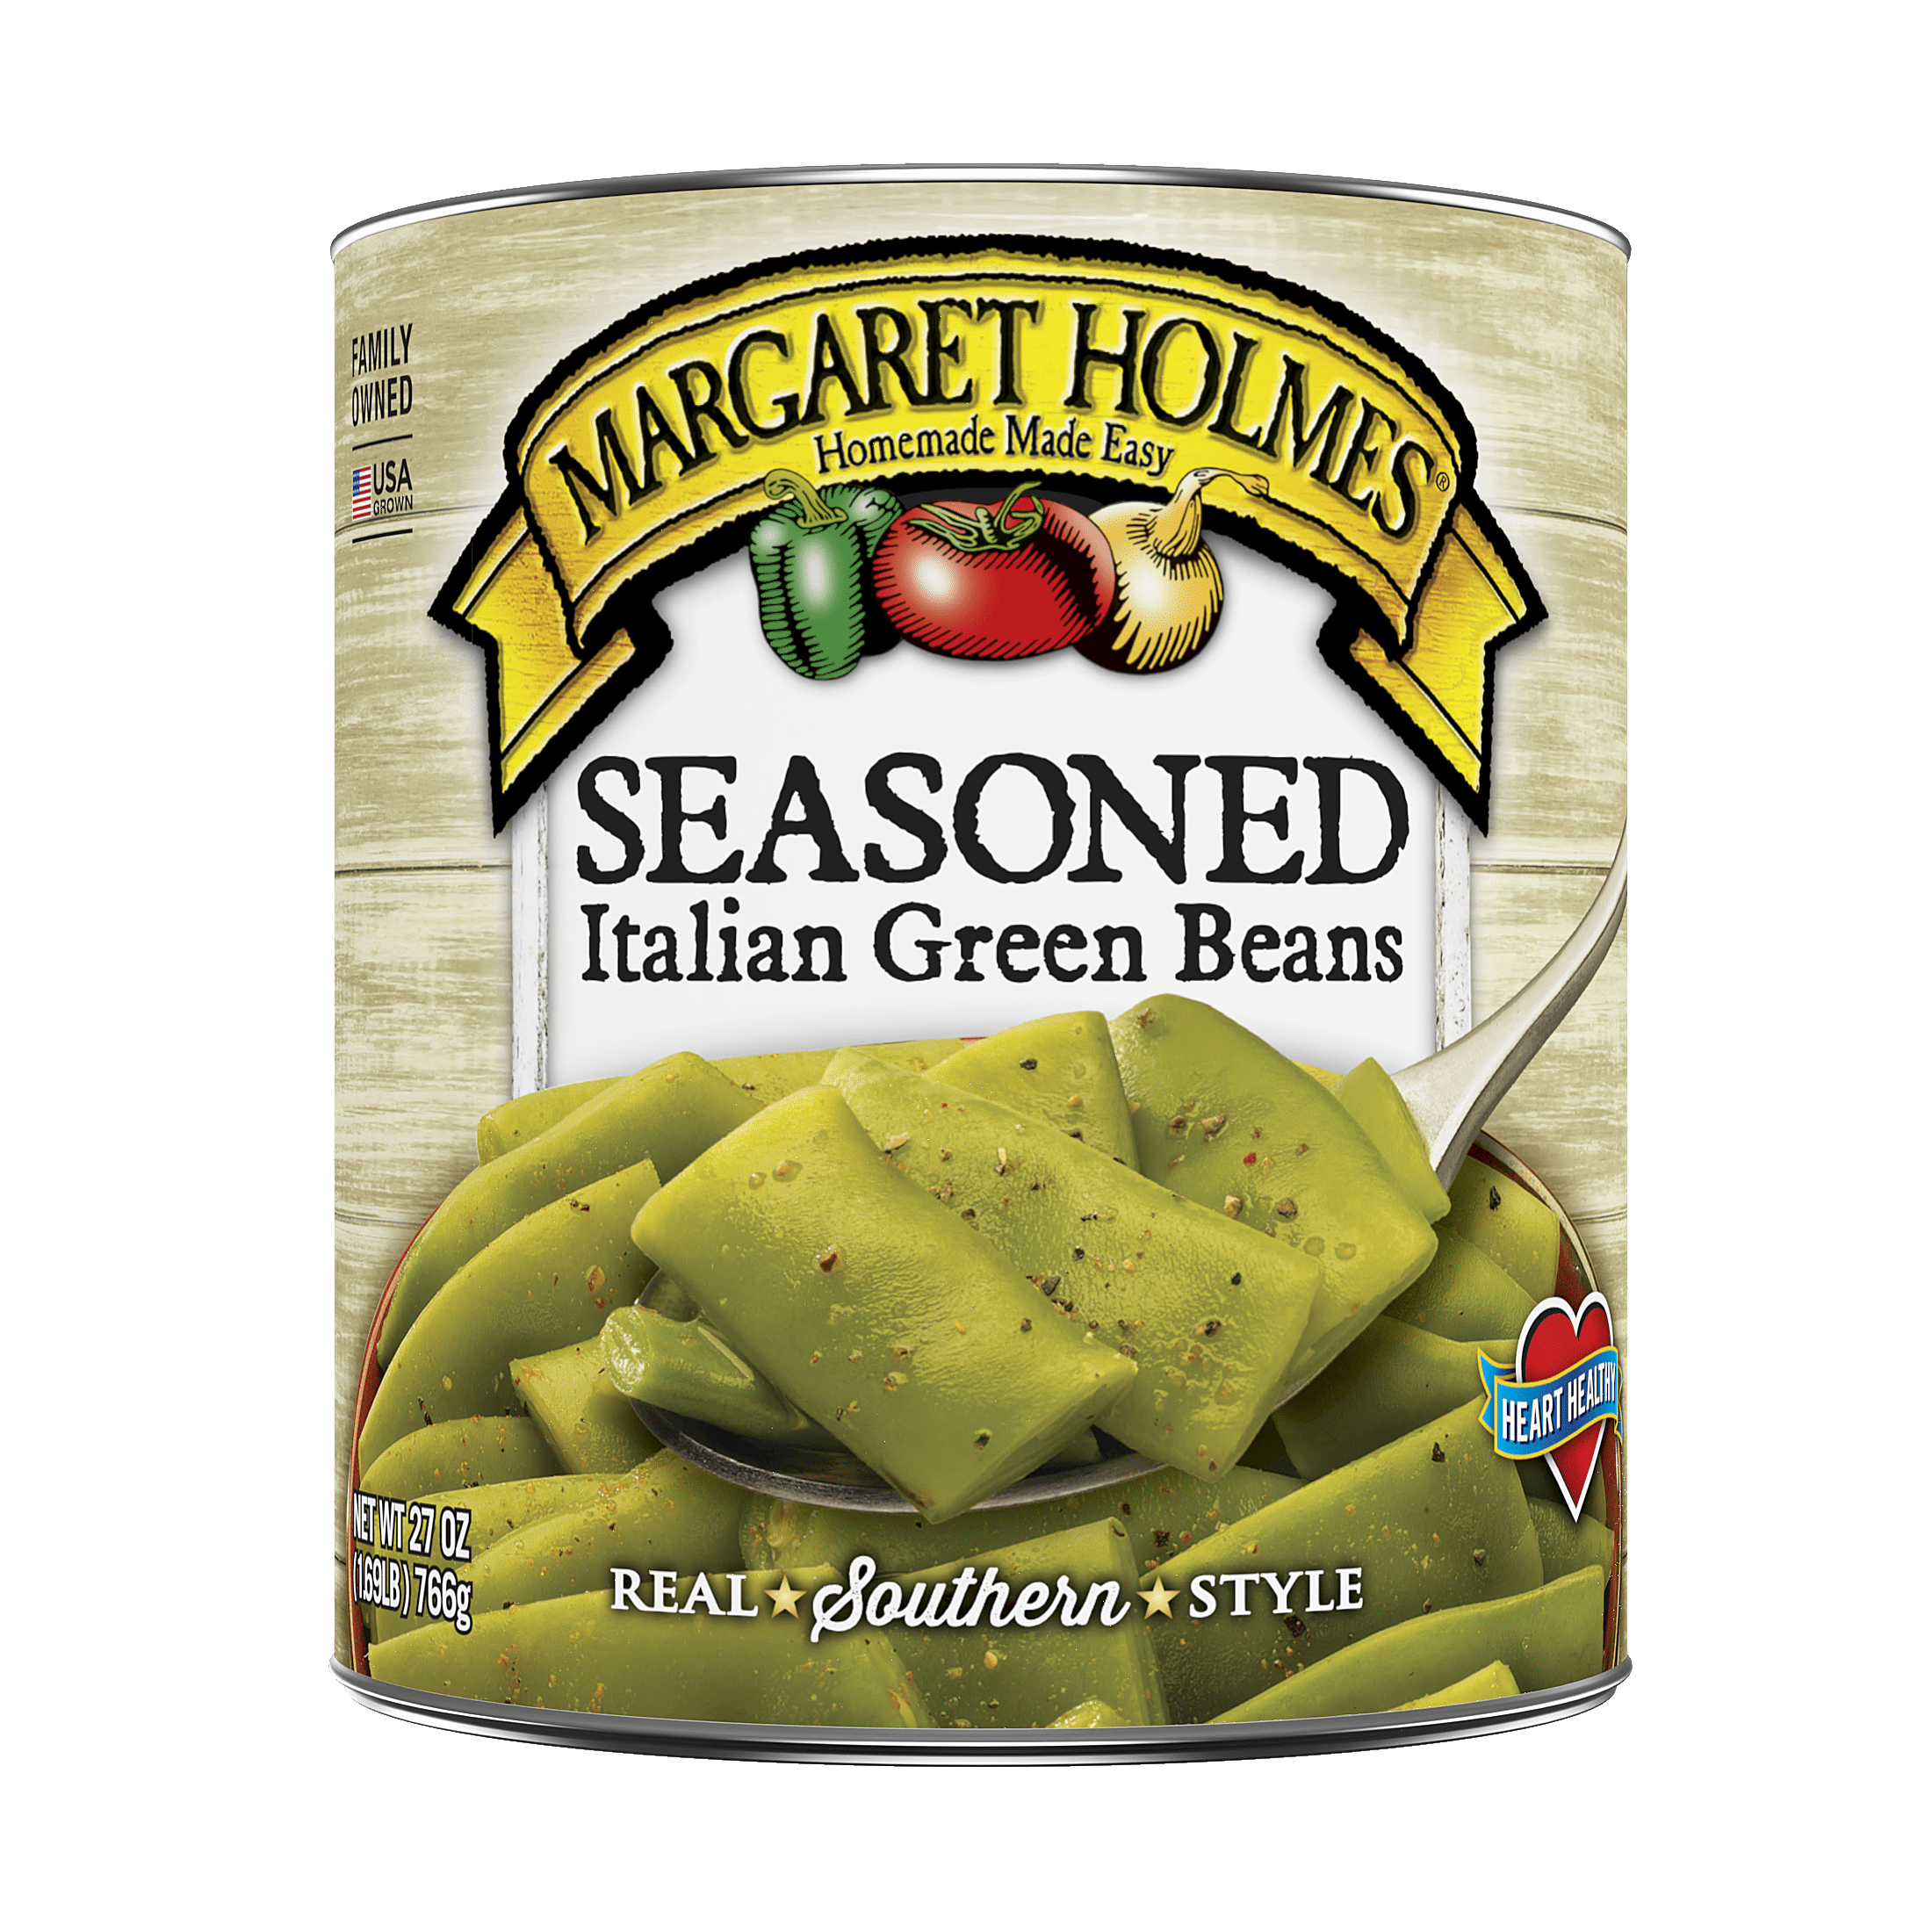 Margaret Holmes Seasoned Italian Green Beans, 27 oz Can